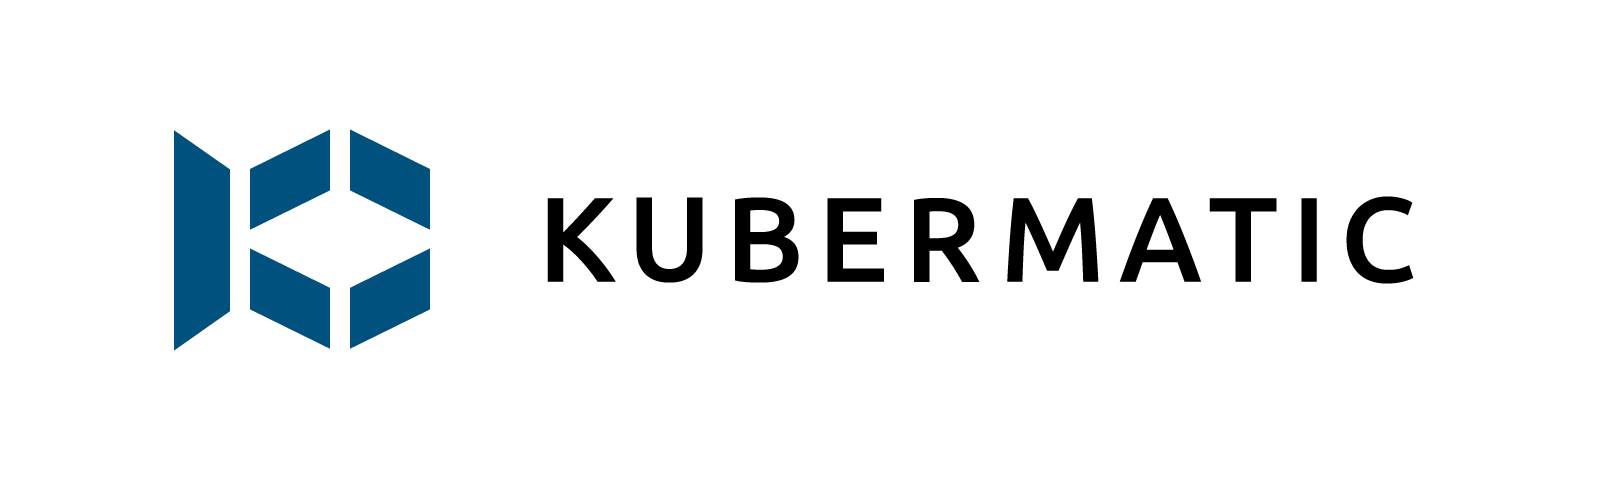 Kubermatic_logo